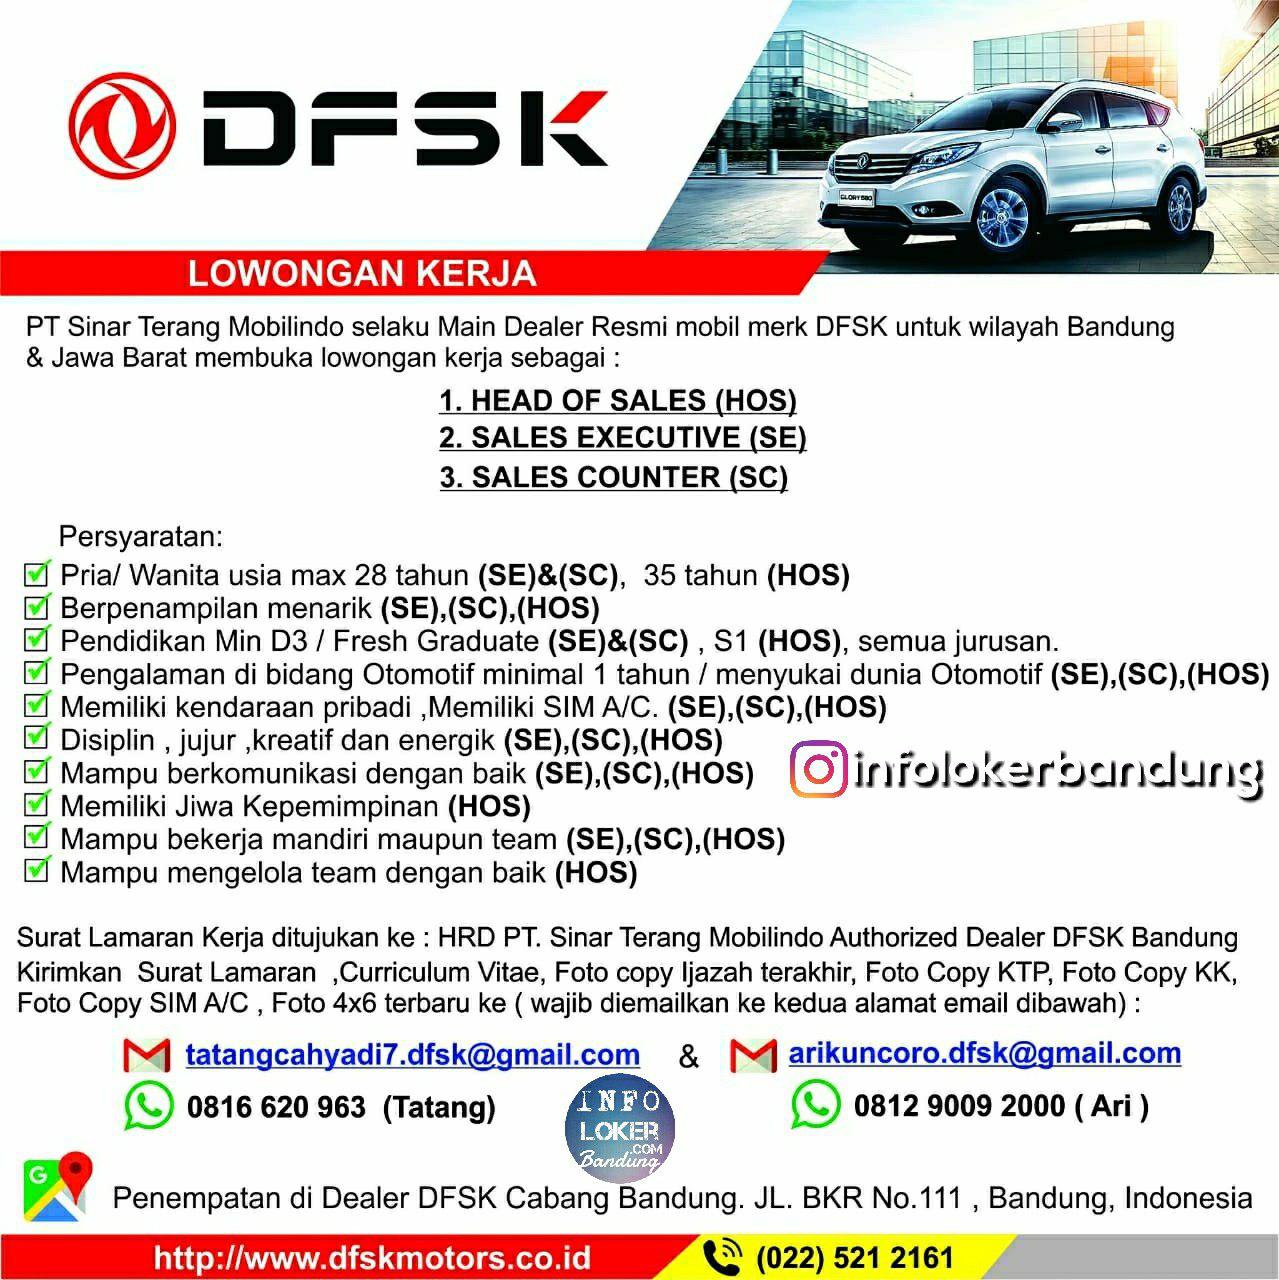 Lowongan Kerja PT. Sinar Terang Mobilindo ( DFSK Mobil ) Bandung Juli 2018 - infolokerbandung.com